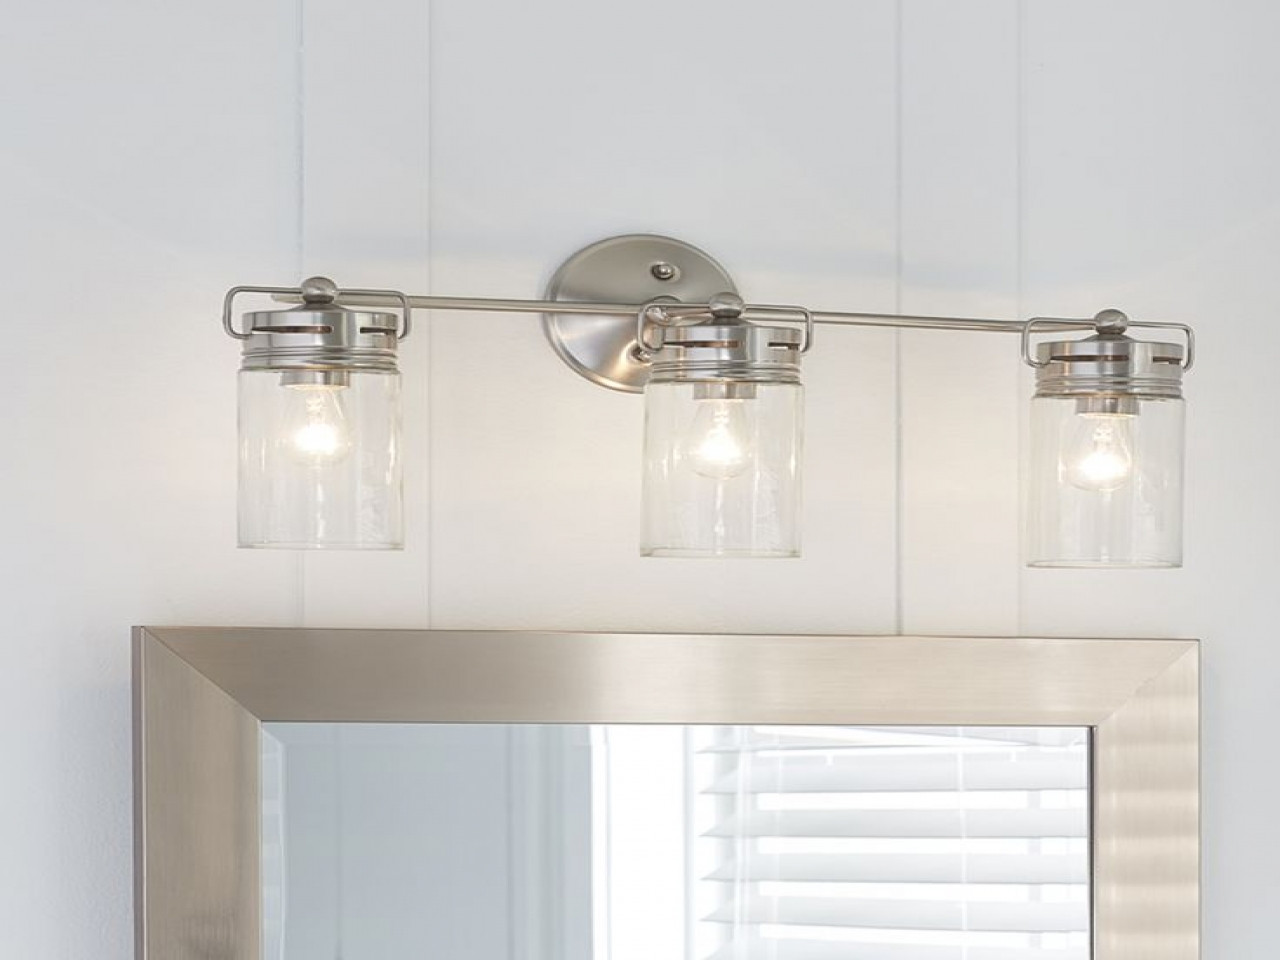 Best ideas about Home Depot Bathroom Lighting
. Save or Pin Bathroom vanity fixture bathroom vanity lighting on Now.